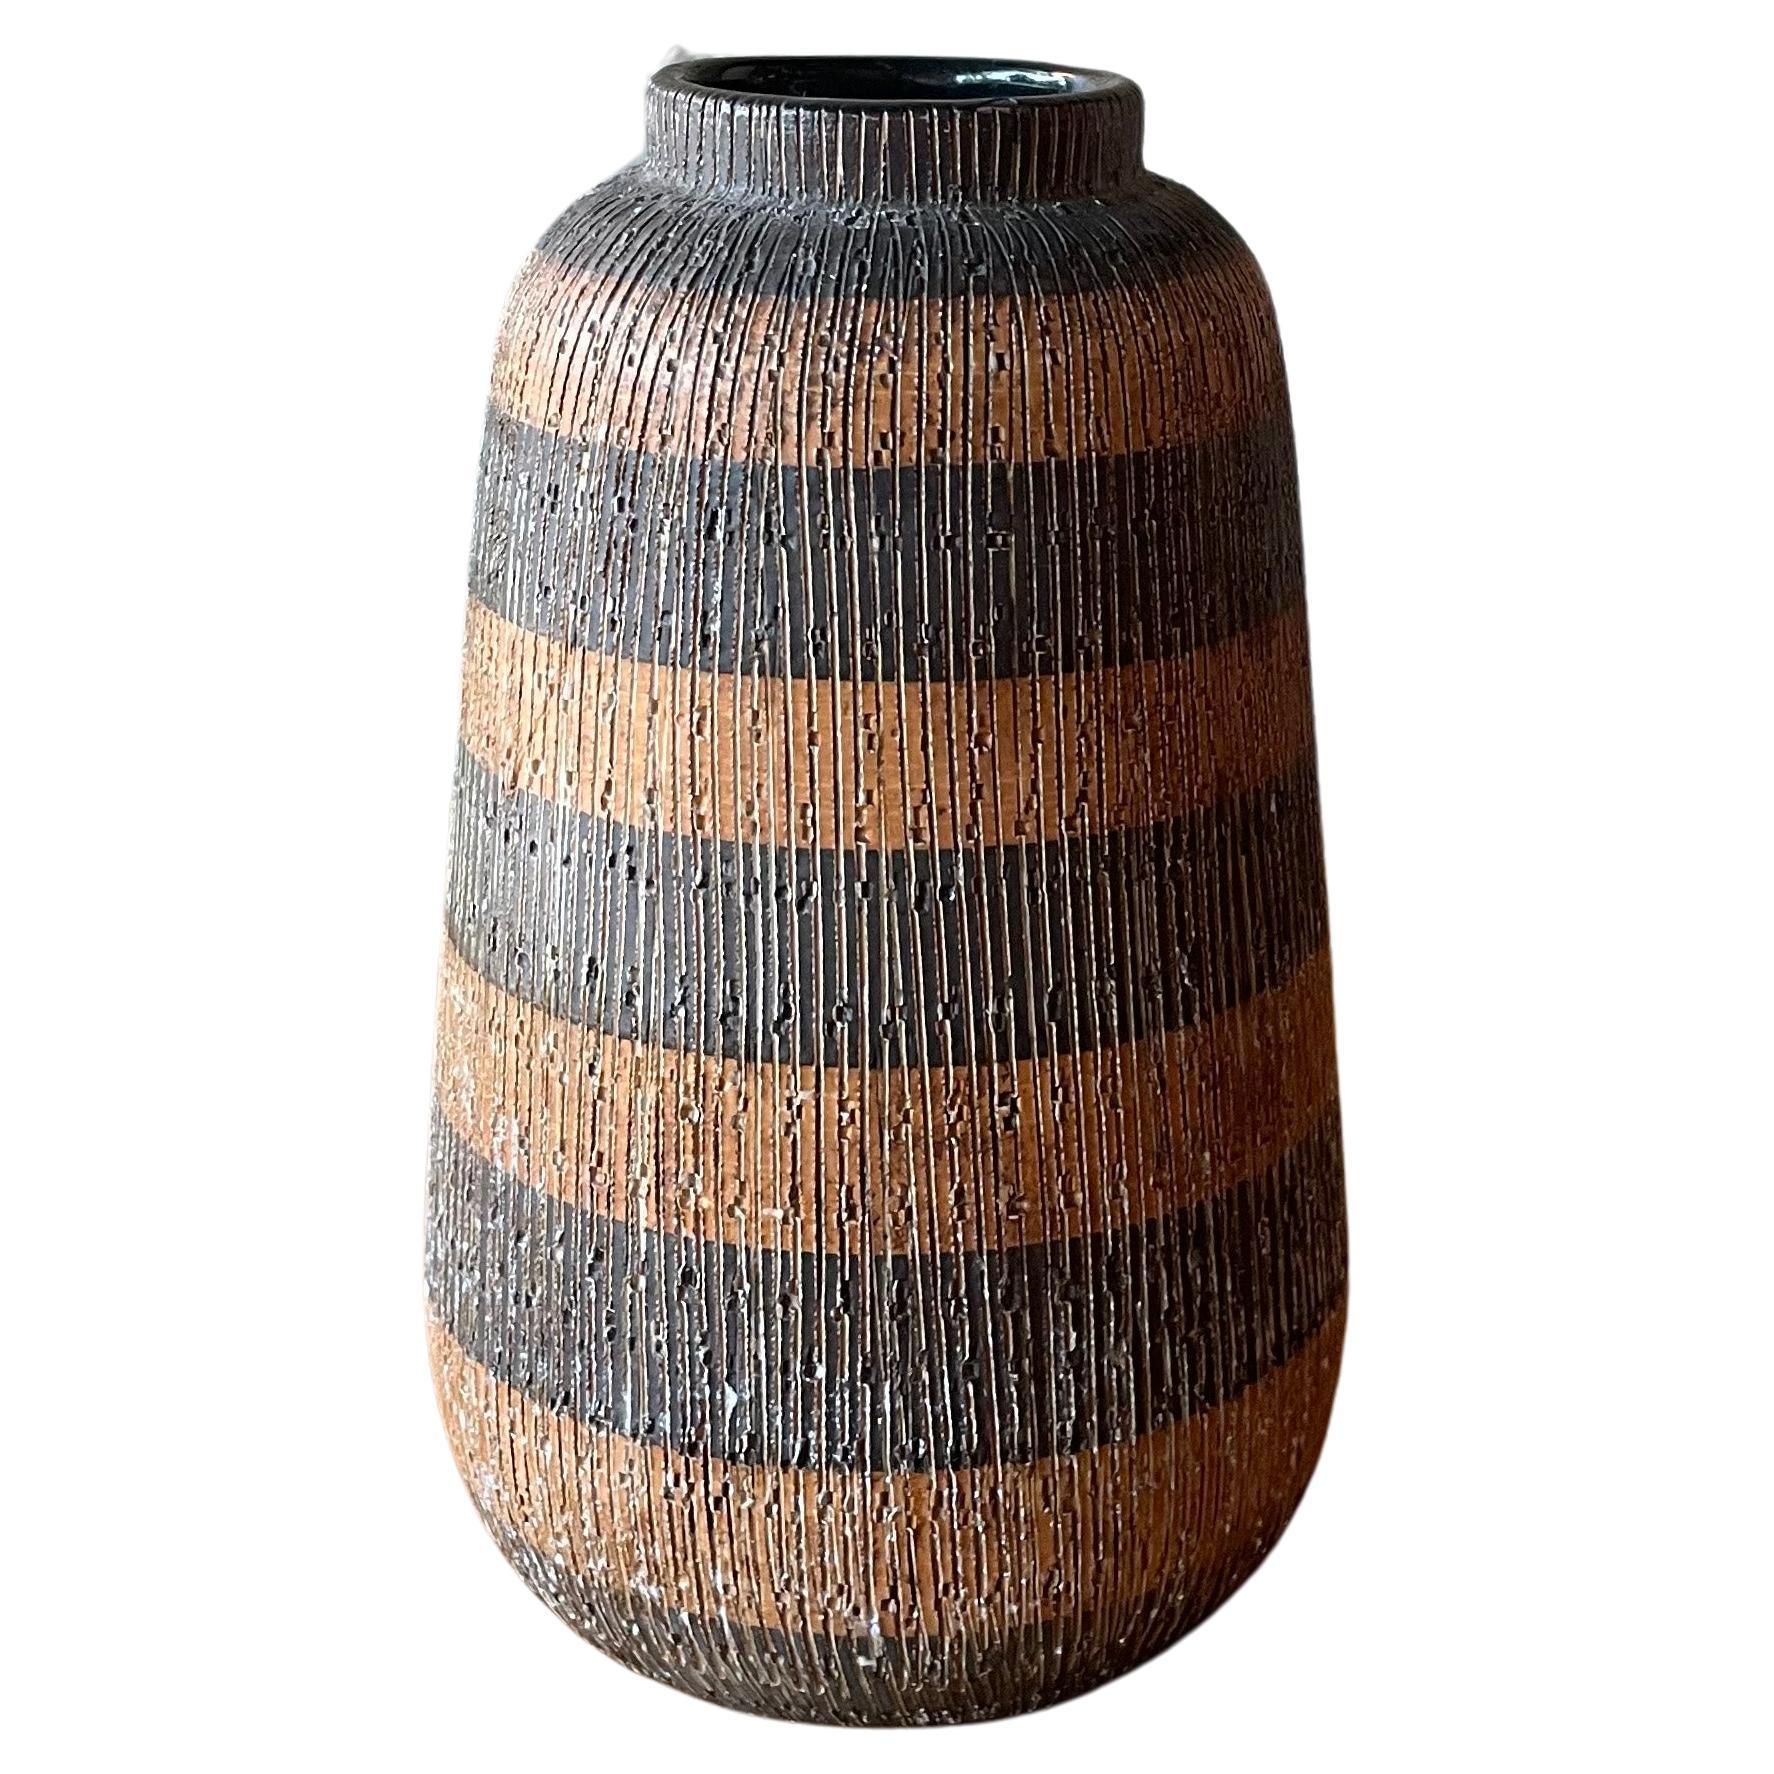 Vase aus Seta-Kunstkeramik von Aldo Londi für Bitossi, Raymor